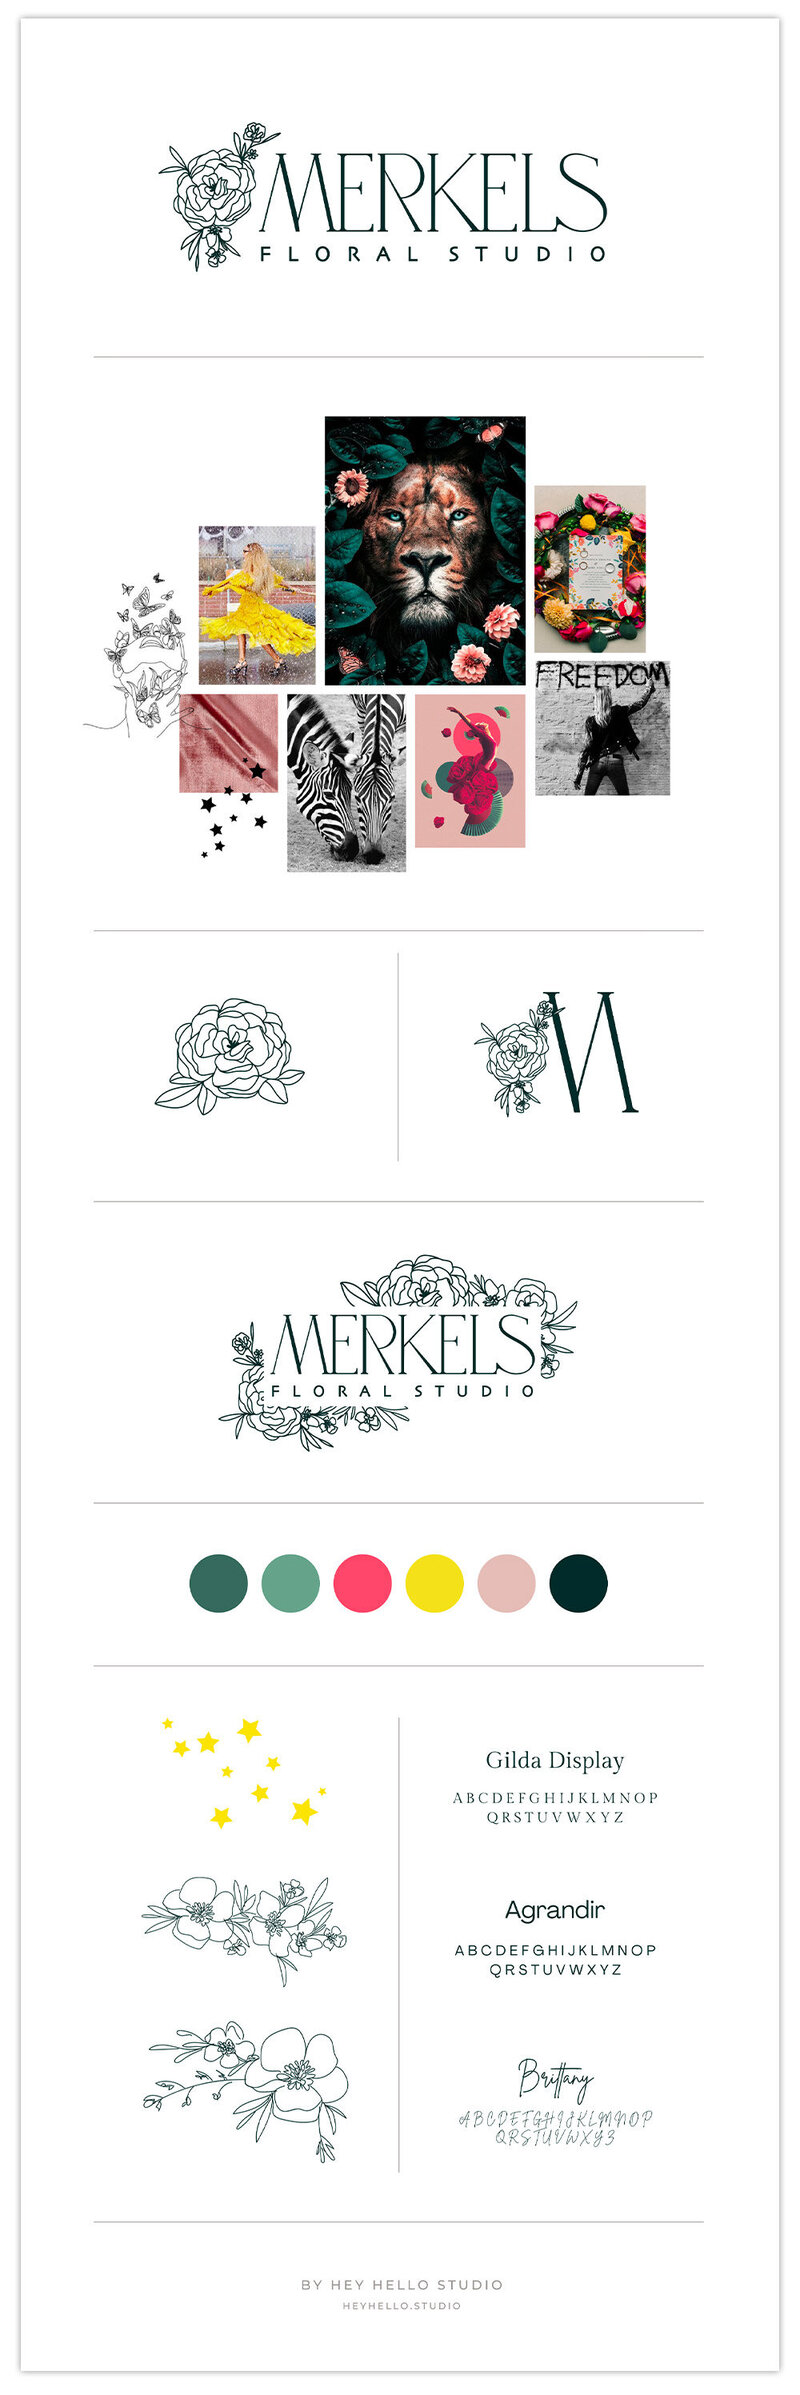 Premium Wedding Florist Branding - Merkels Floral Studio by Hey Hello Studio